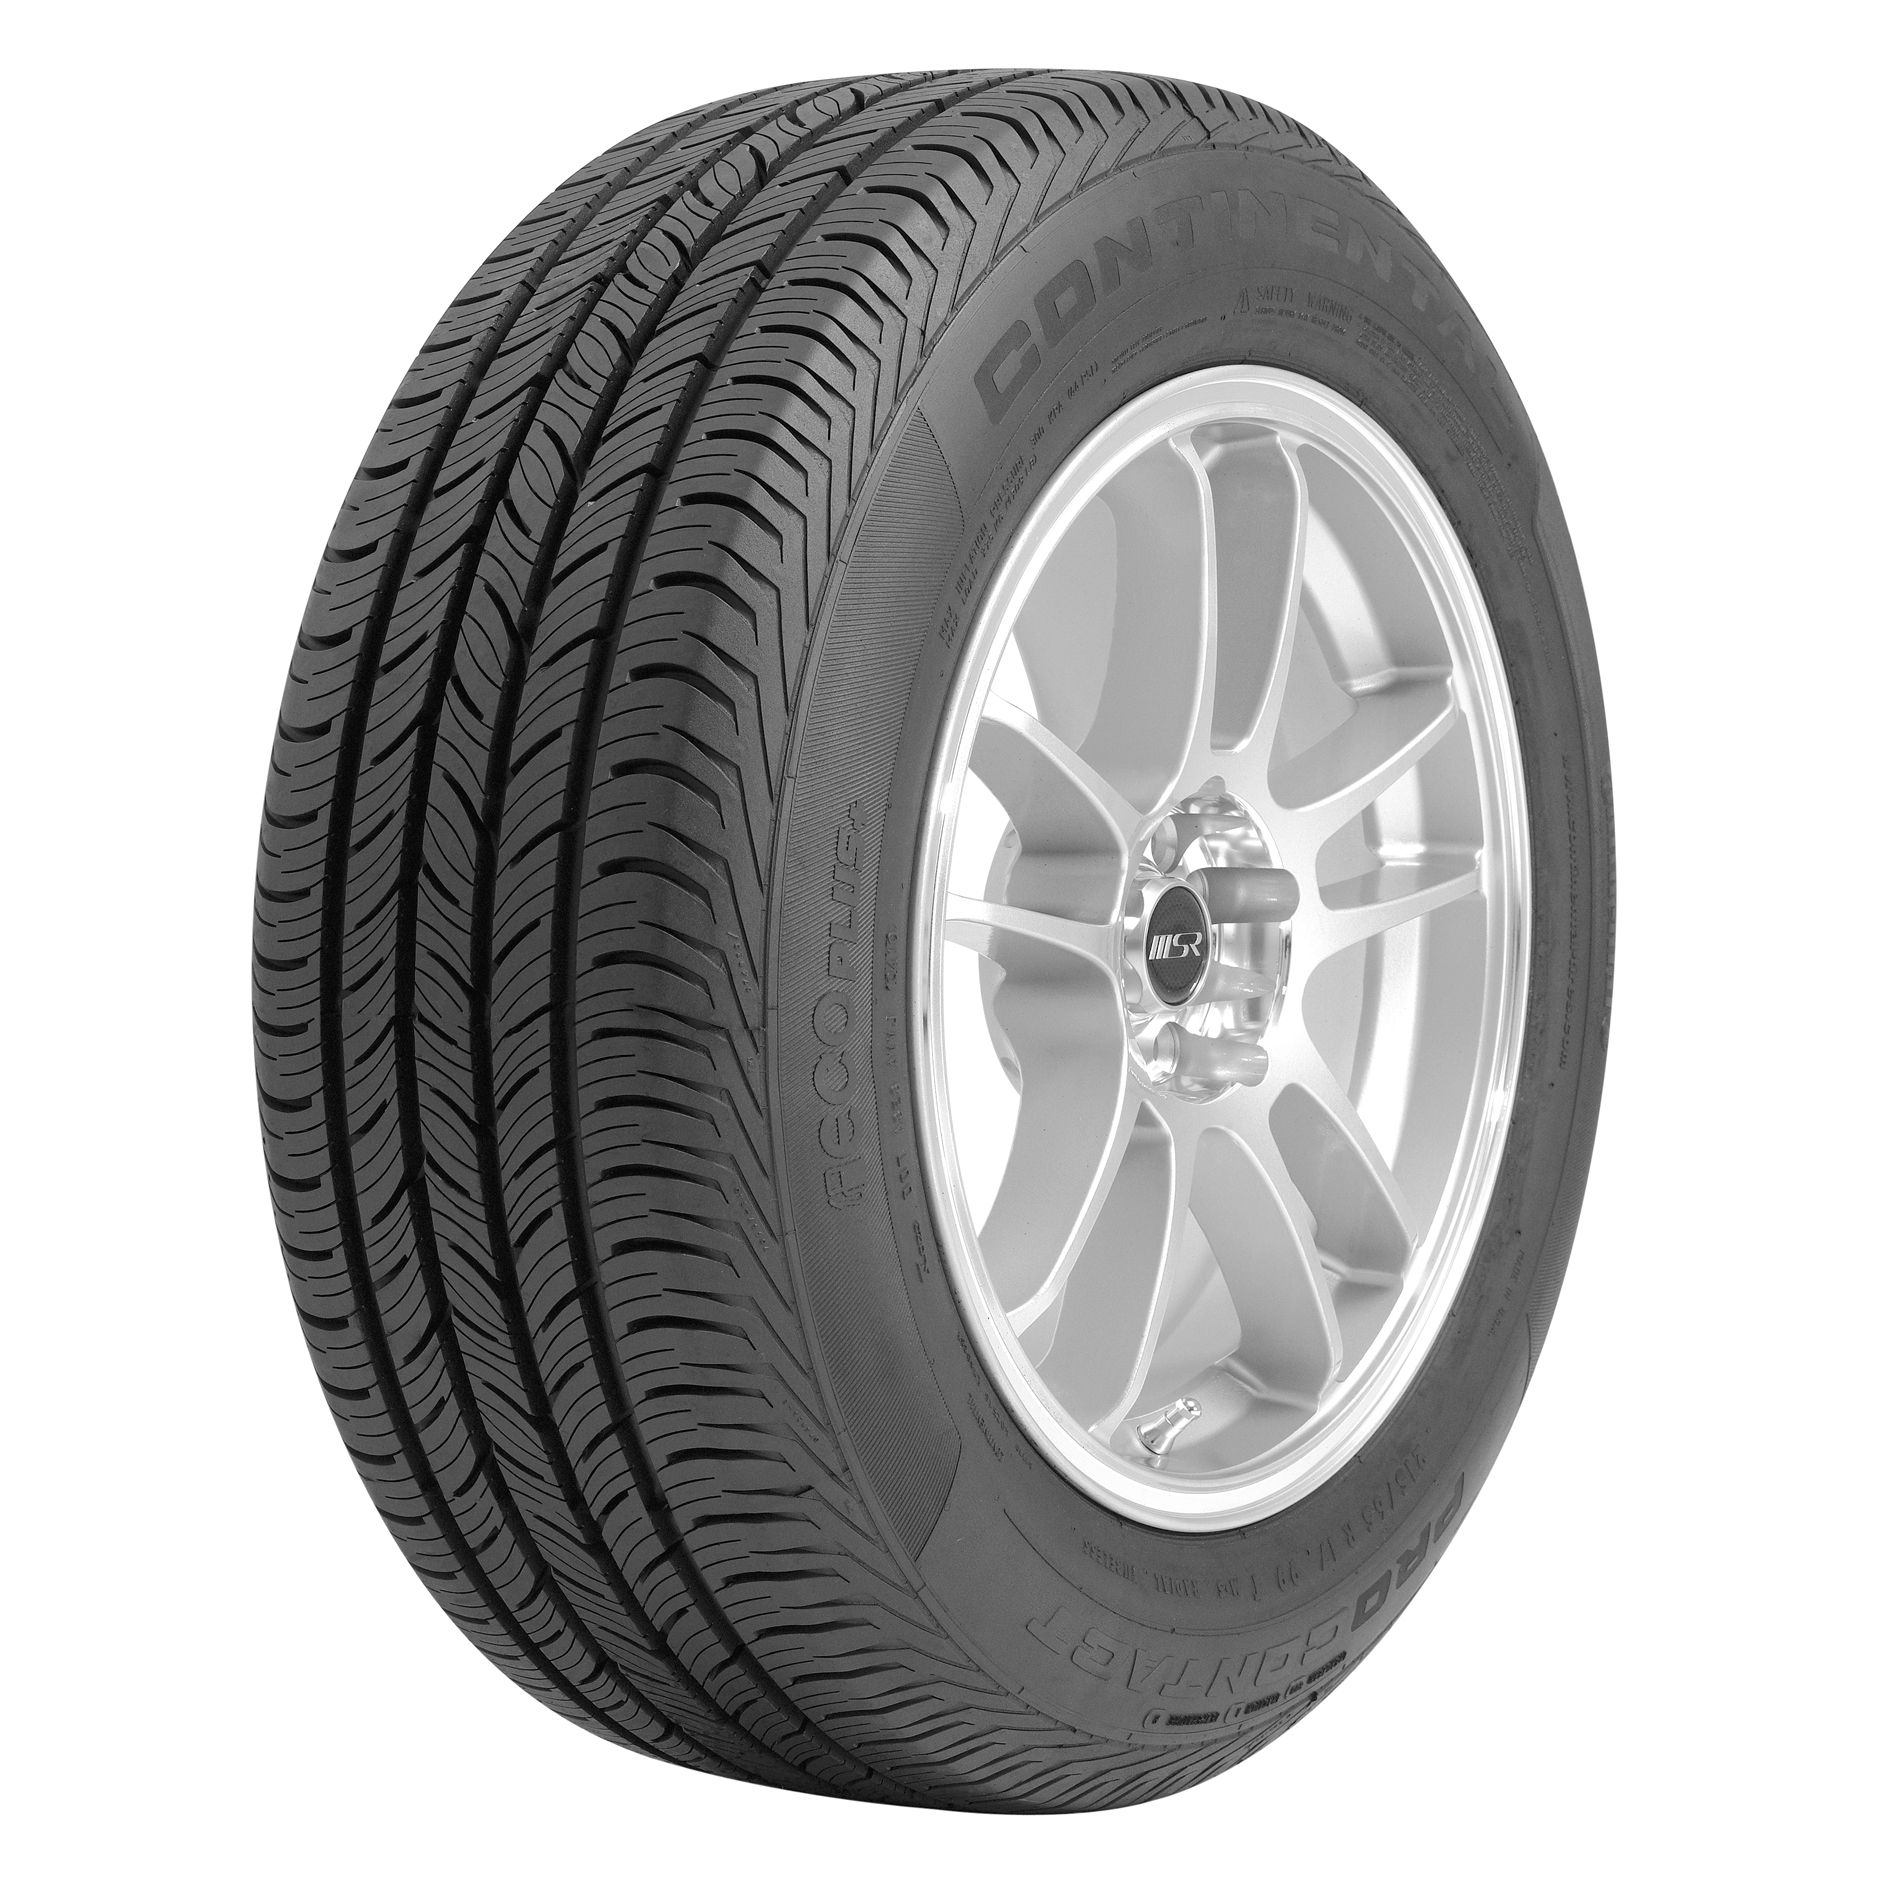 Continental Pro Contact Eco Plus - 205/60R16 92T BW - All-Season Tire